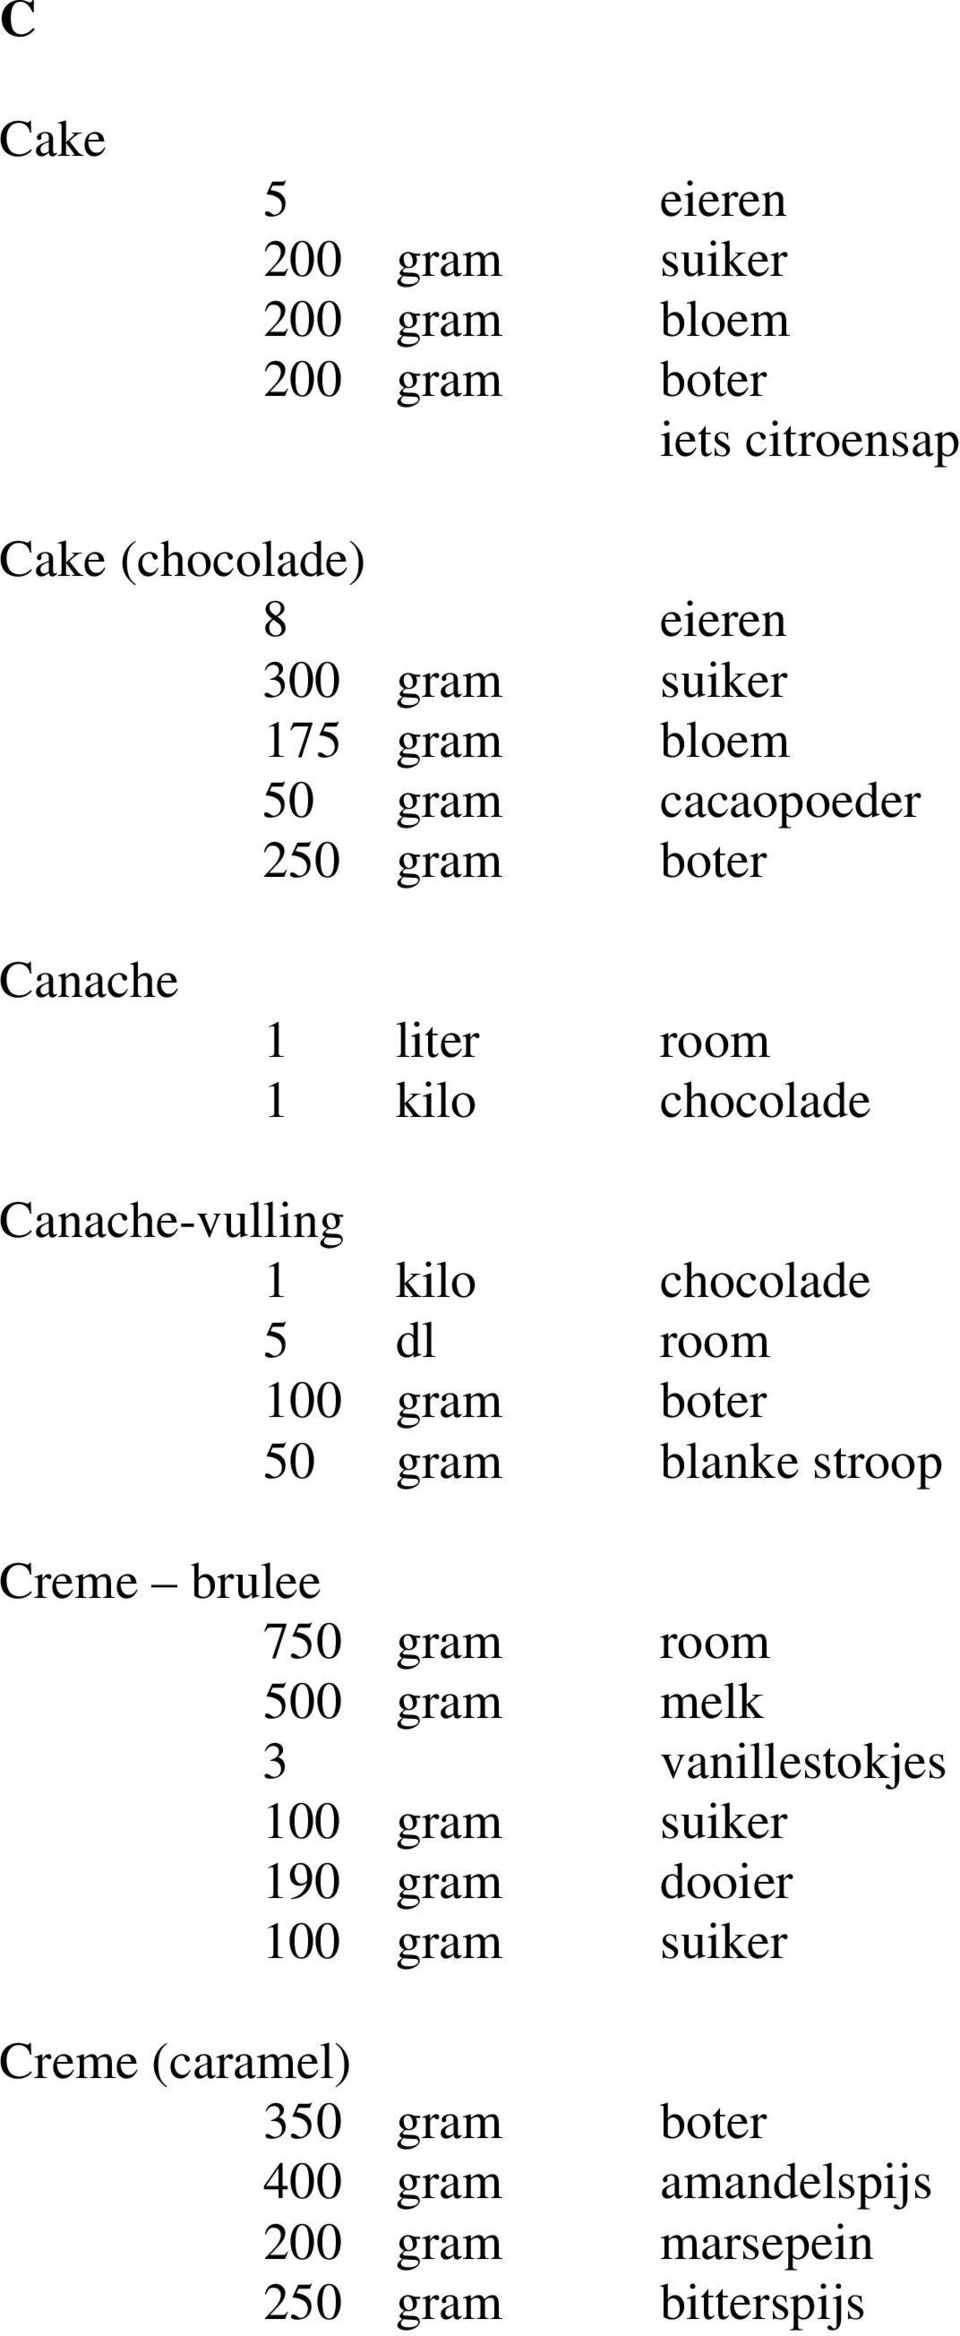 5 dl room 100 gram boter 50 gram blanke stroop Creme brulee 750 gram room 500 gram melk 3 vanillestokjes 100 gram suiker